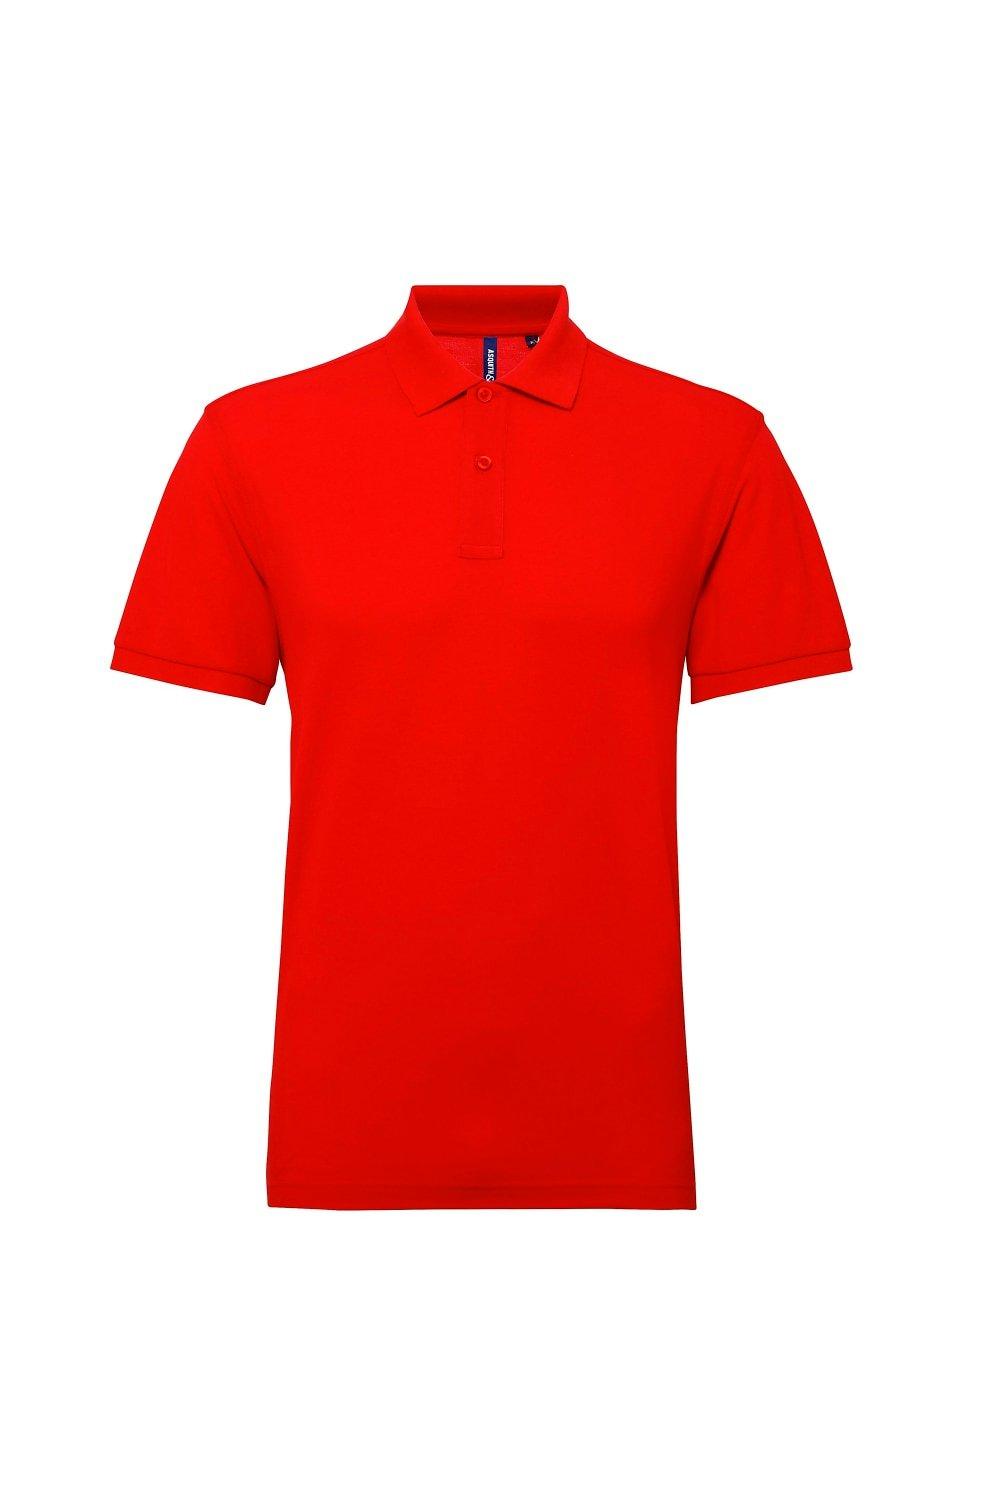 цена Рубашка поло Performance Mix с короткими рукавами Asquith & Fox, красный